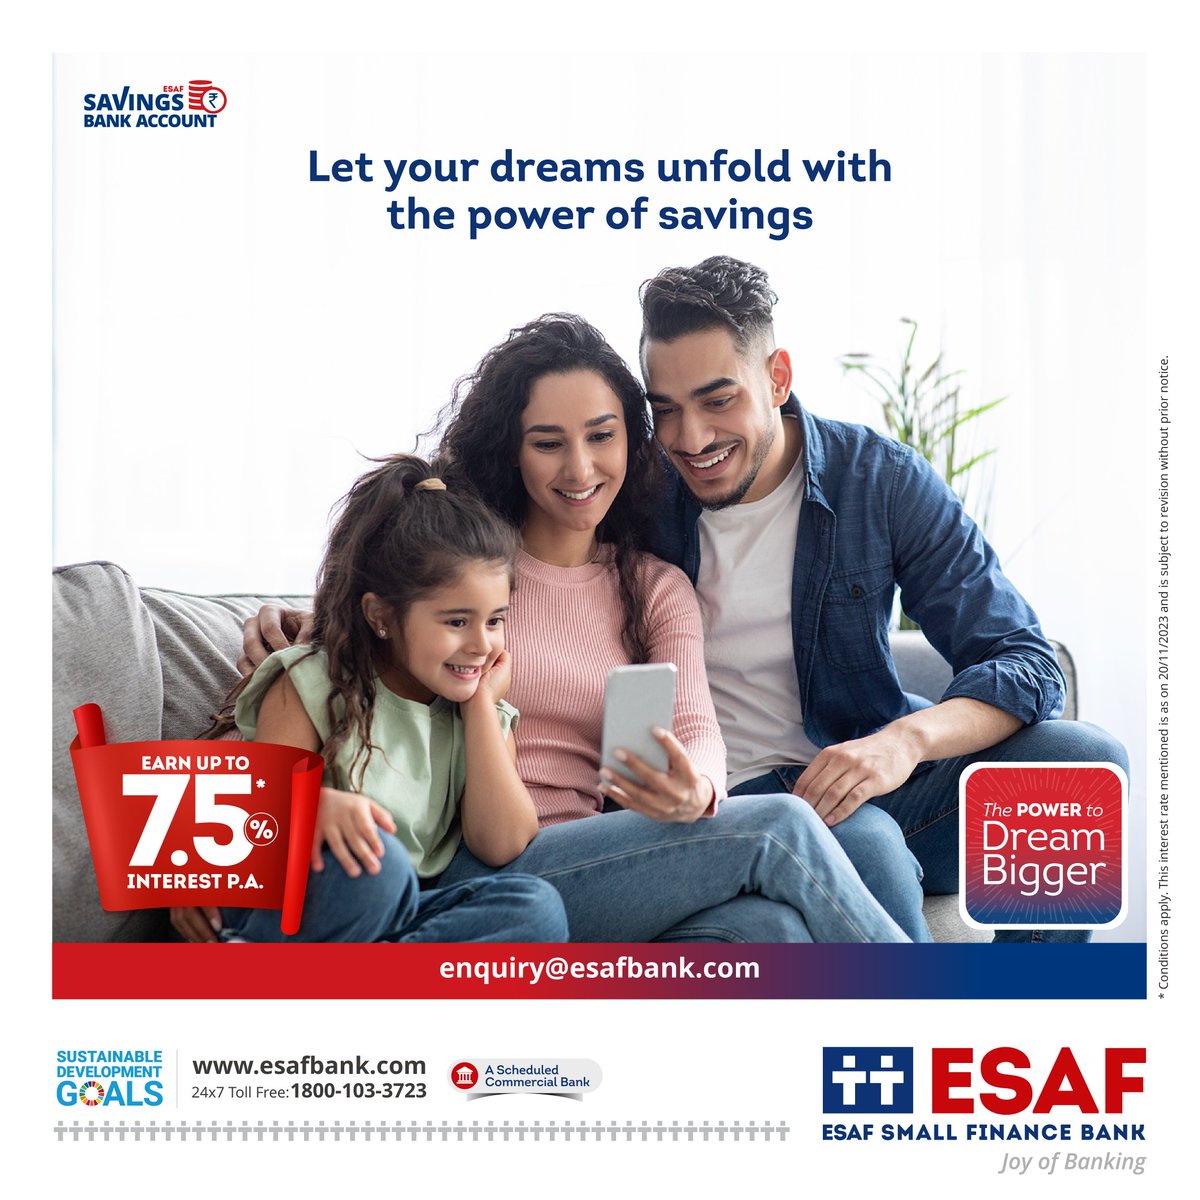 Power your financial dreams and enjoy joyful savings with ESAF Savings Bank Account, offering attractive interest rates of up to 7.5% per annum.

#SavingsAccount #ESAFBank #JoyOfBanking #PowerToDreamBigger